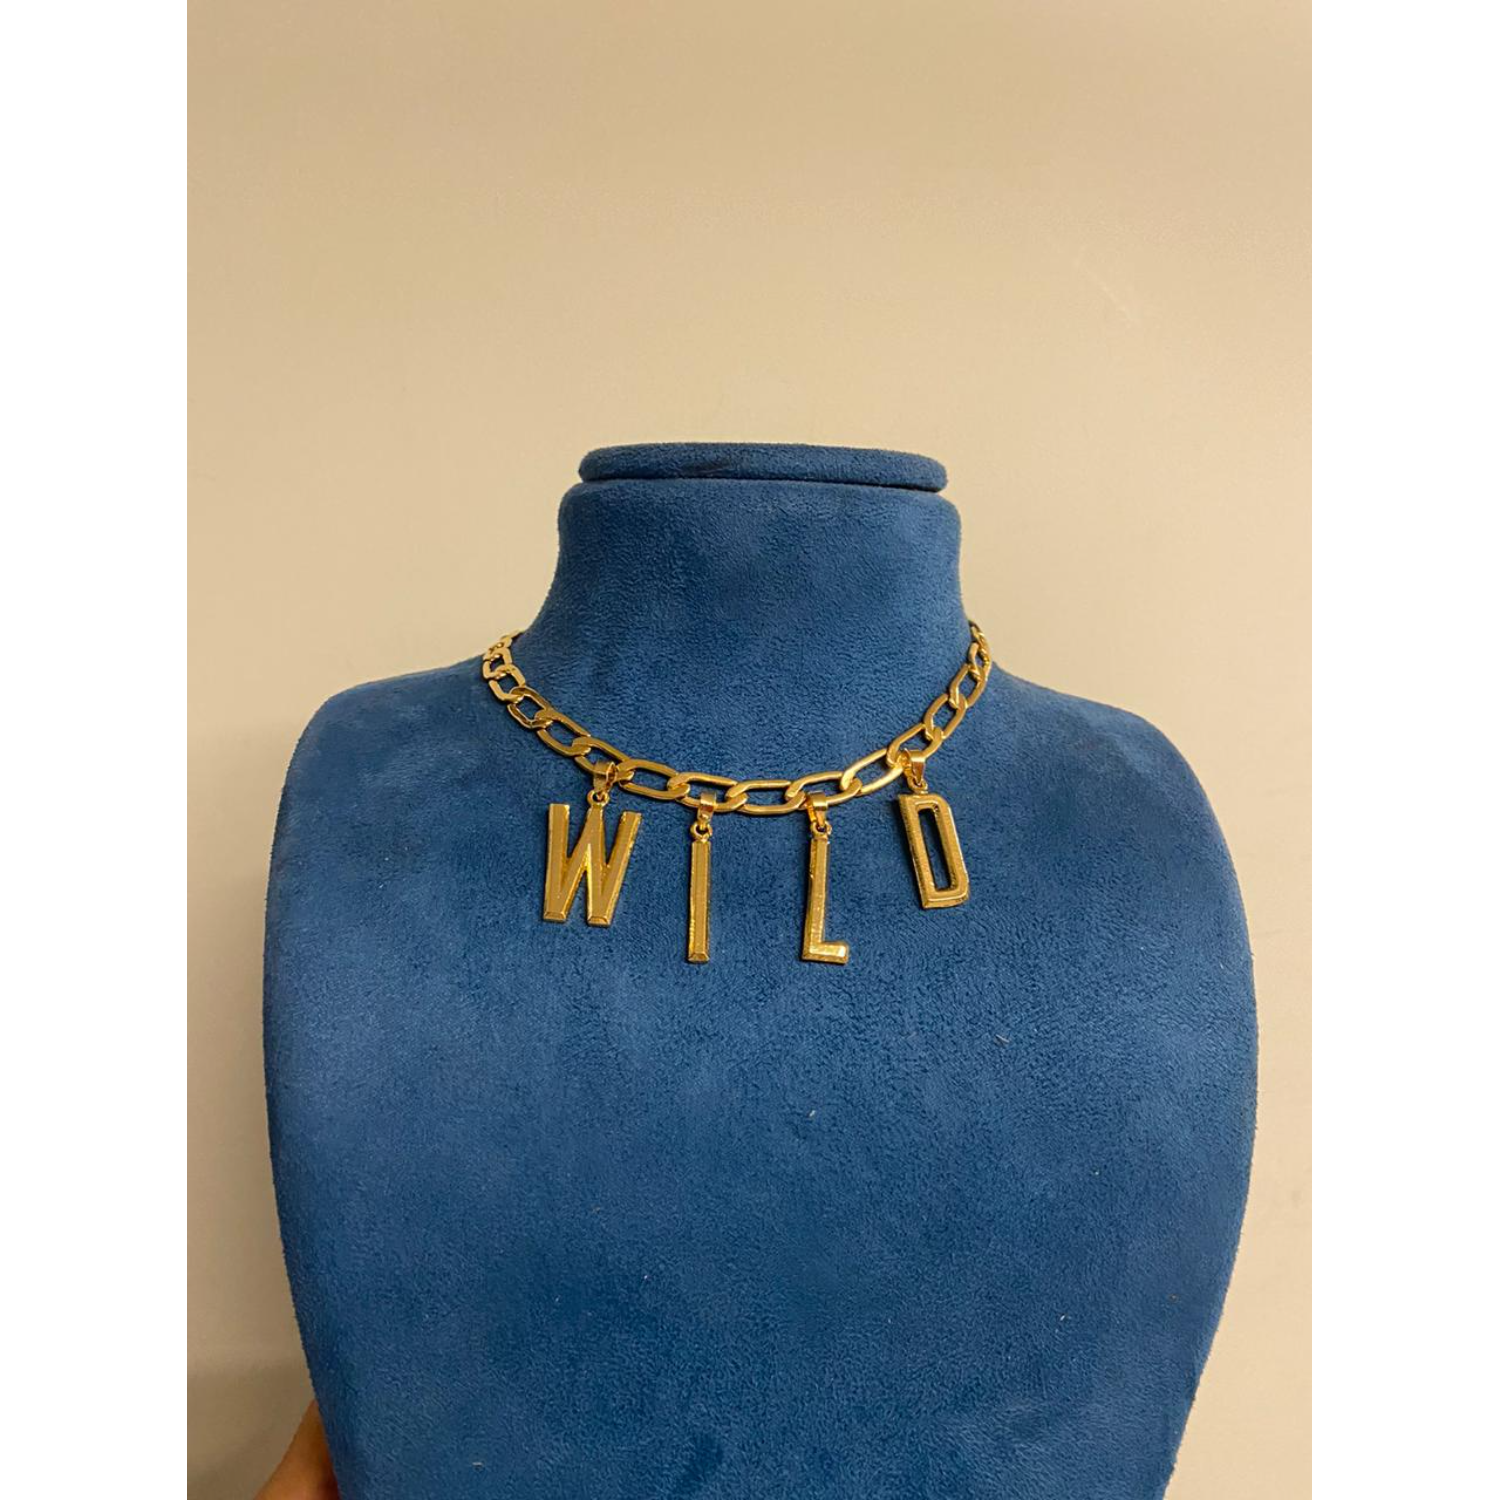 Wild Word Power Necklace